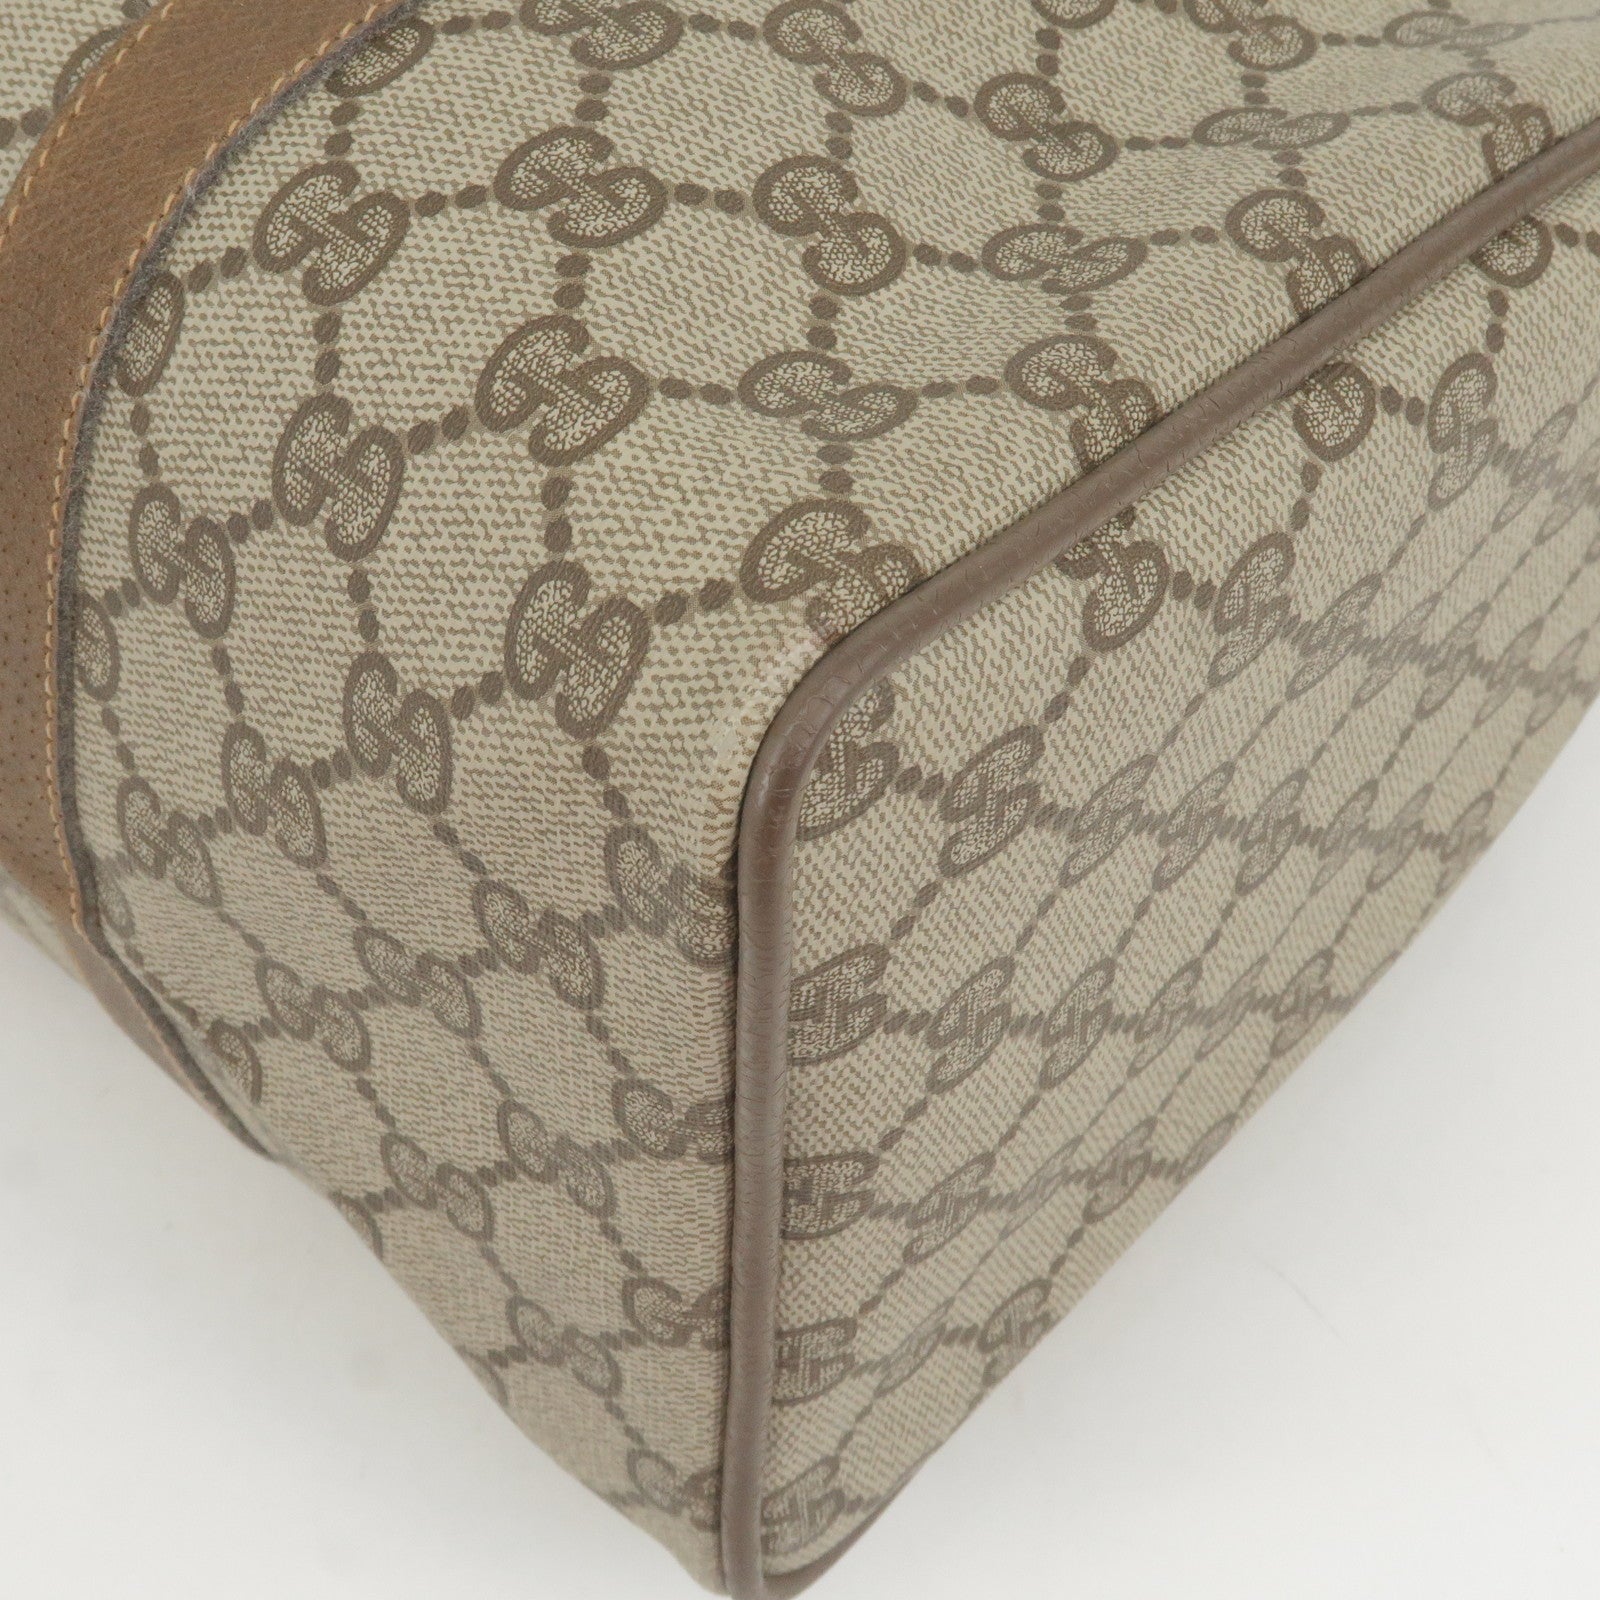 Vintage limited edition Gucci boston bag. AGC1392 – LuxuryPromise